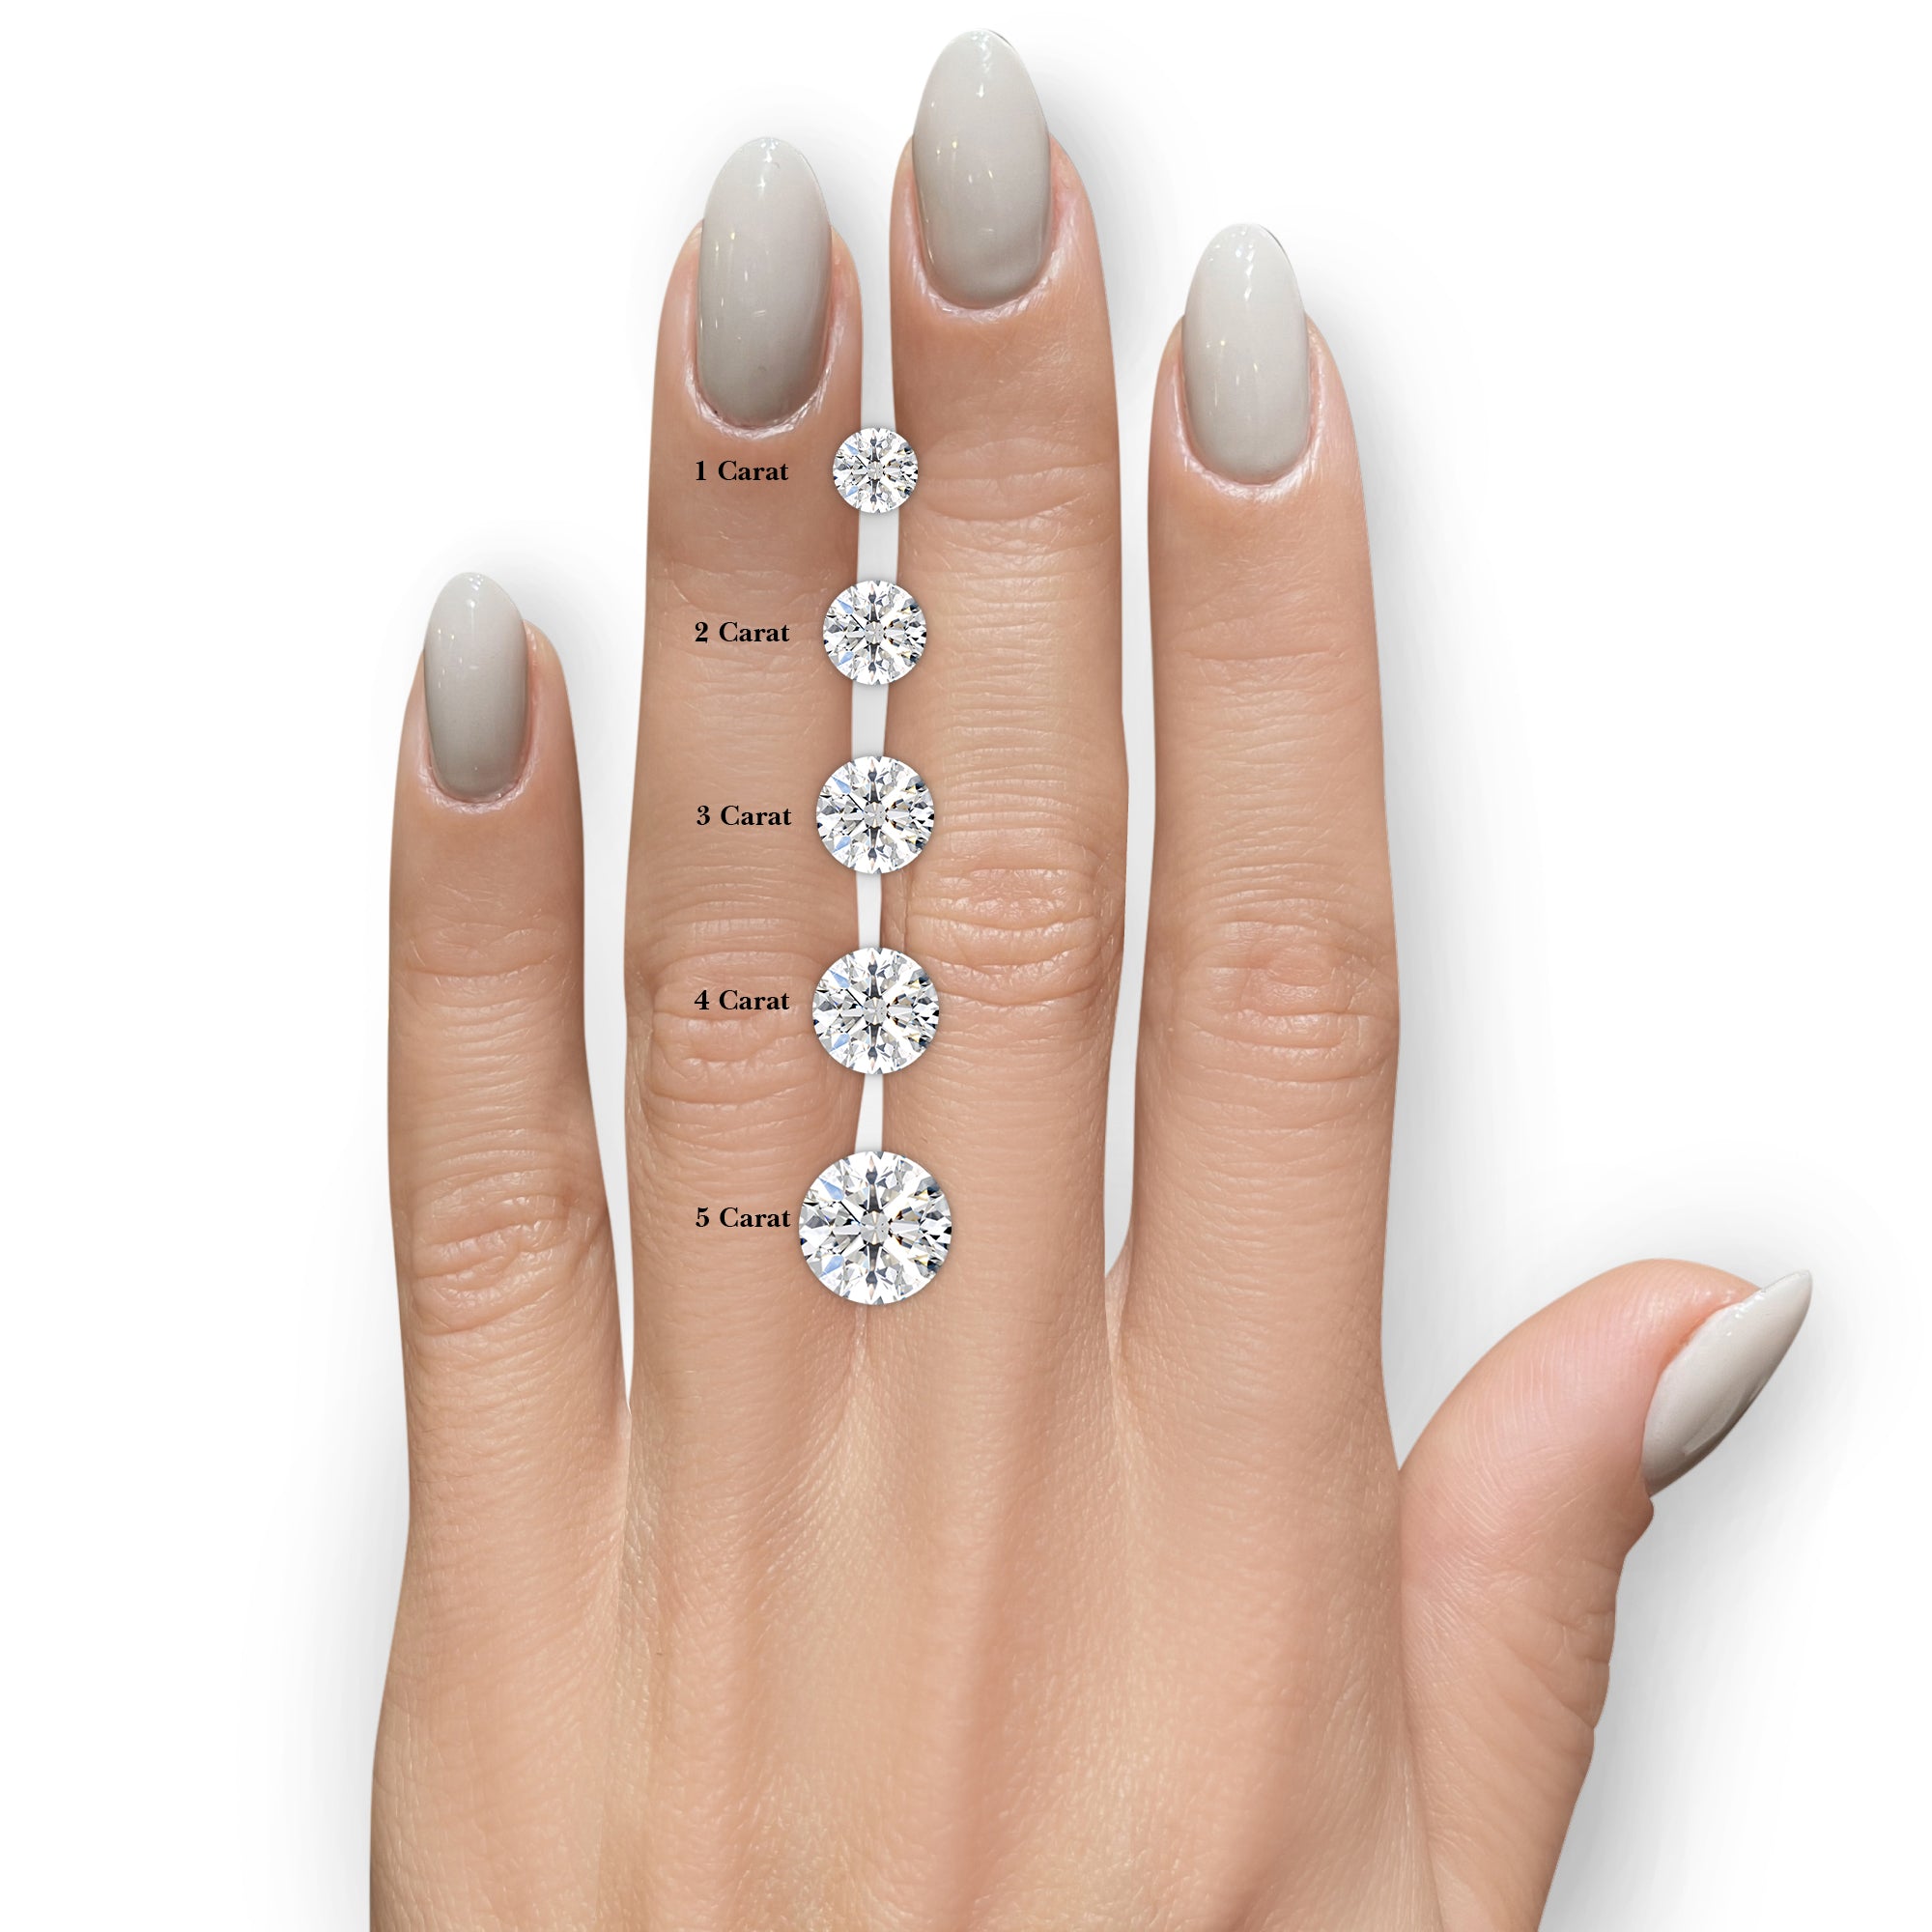 Eloise Lab Grown Diamond Ring -14K White Gold